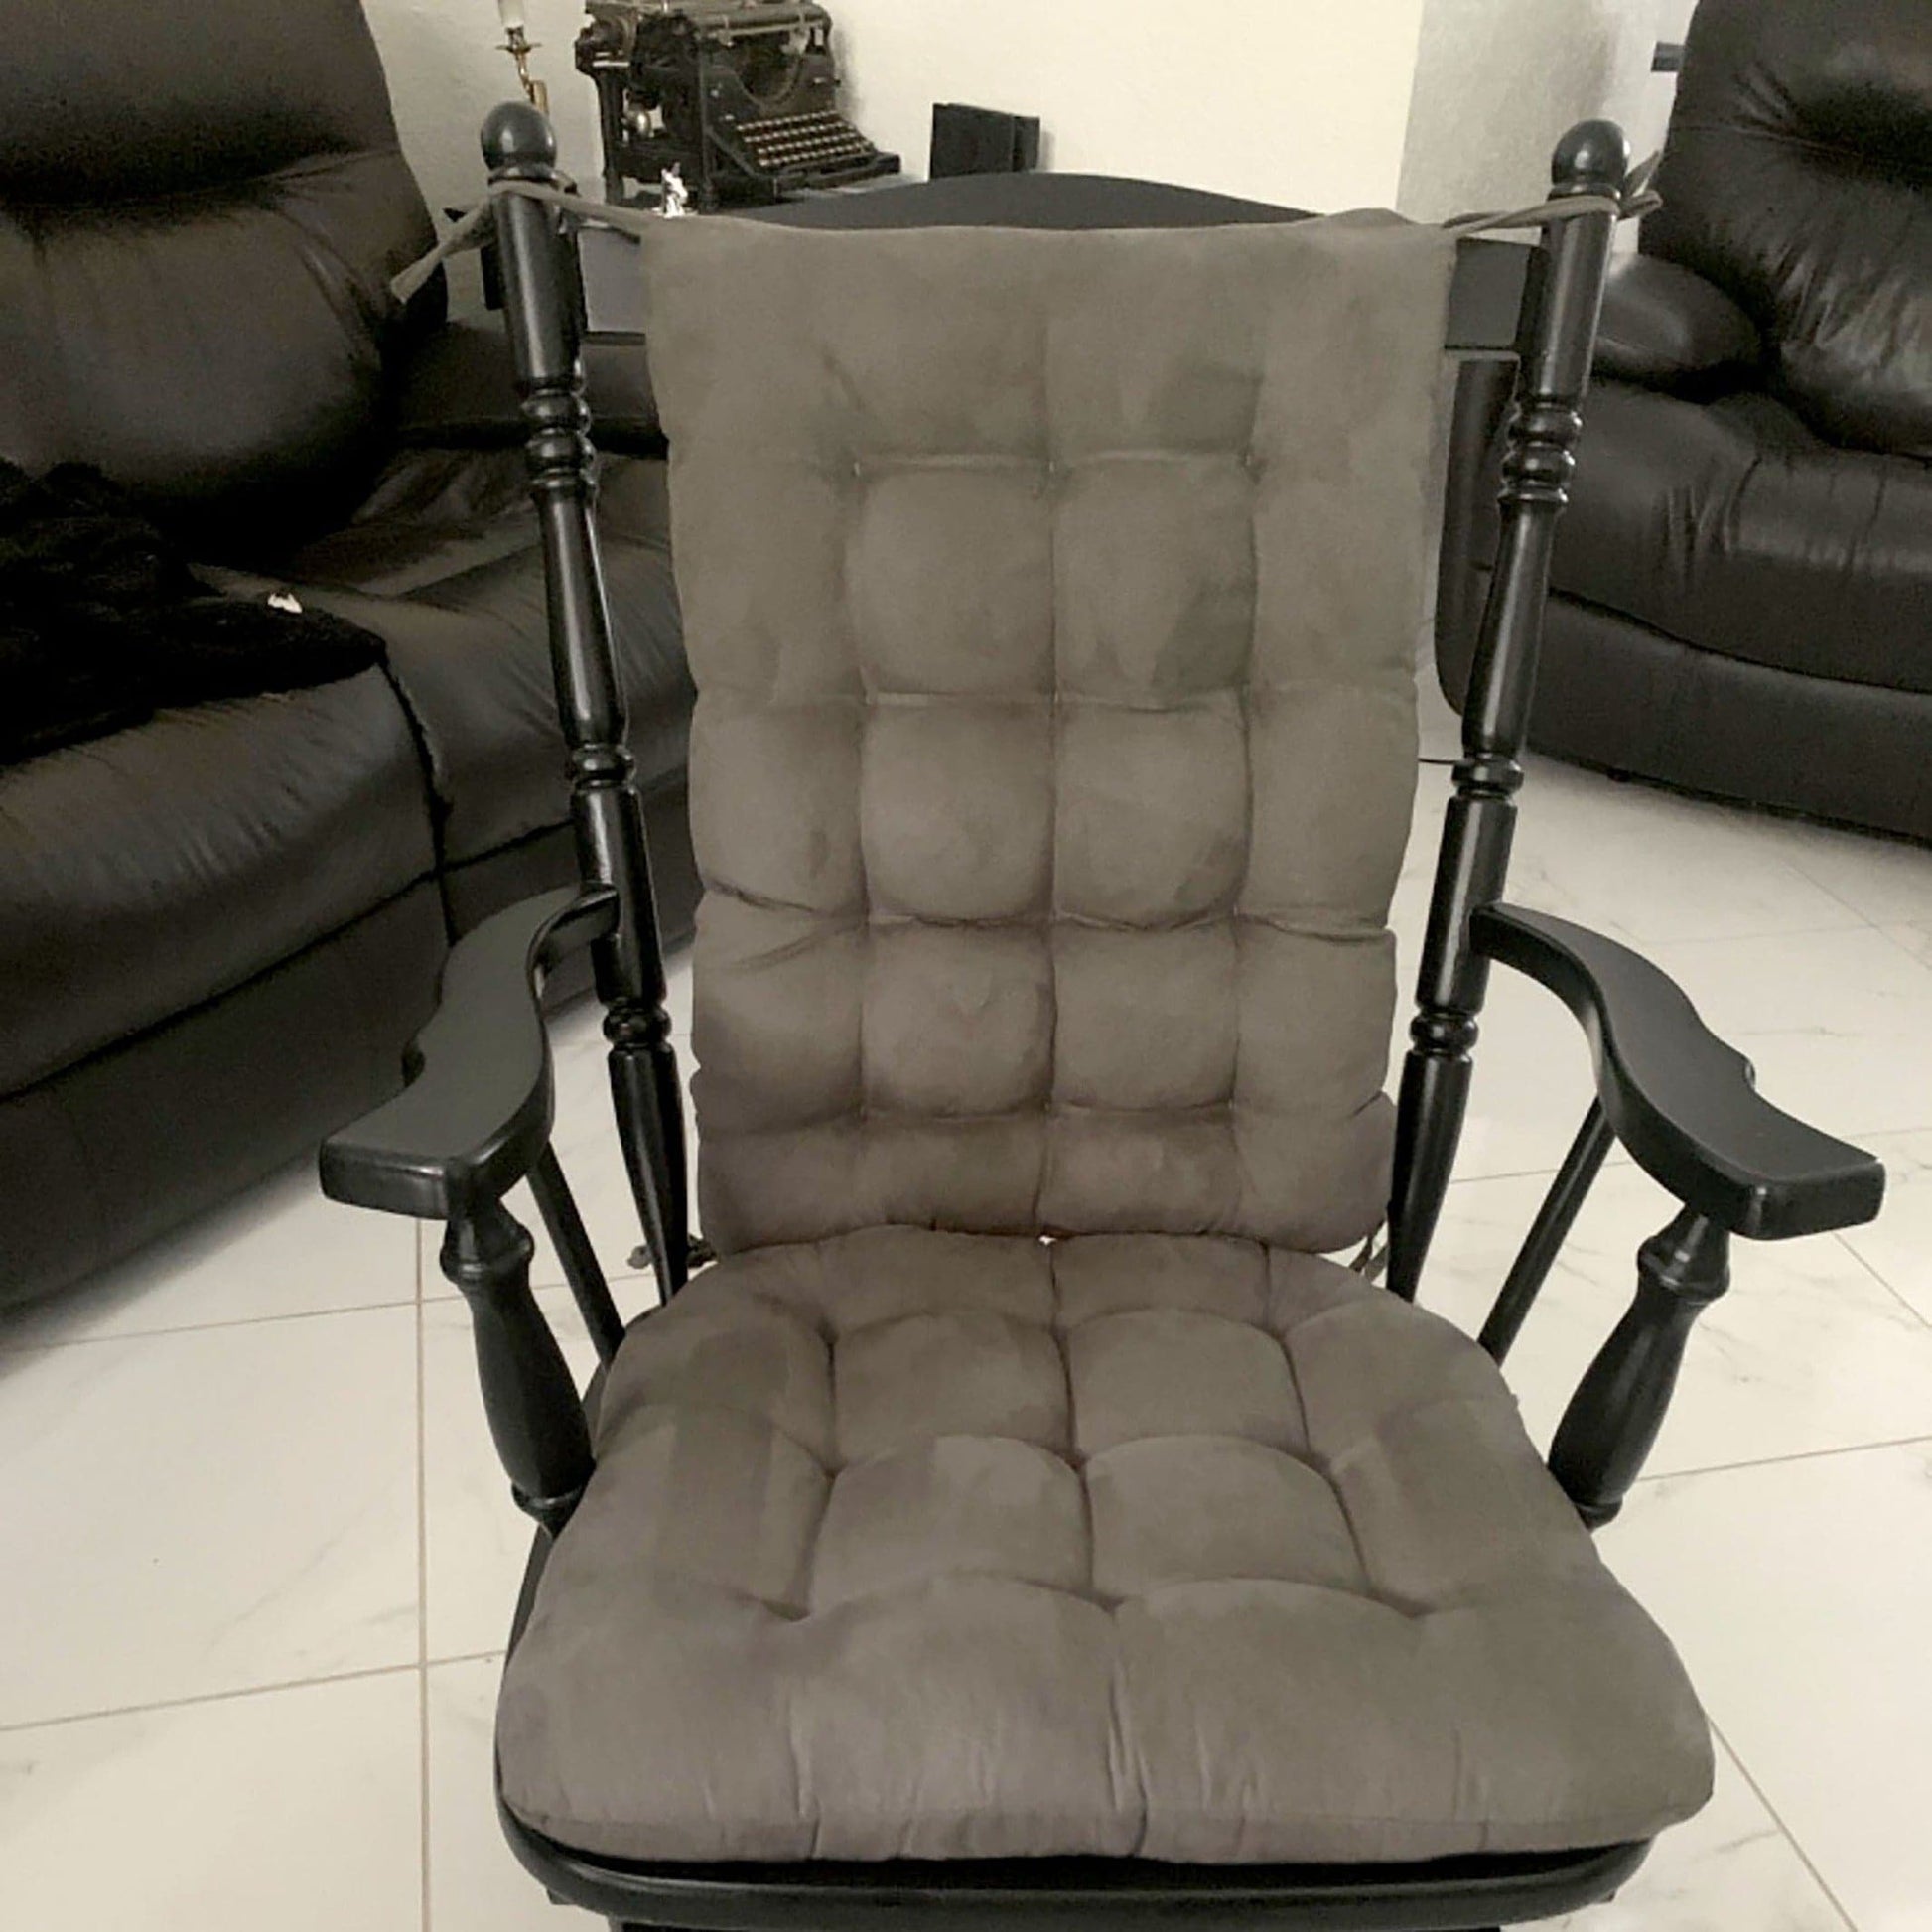 Bistro Chair Cushion - Rave Graphite Grey - 16 Round Chair Pad